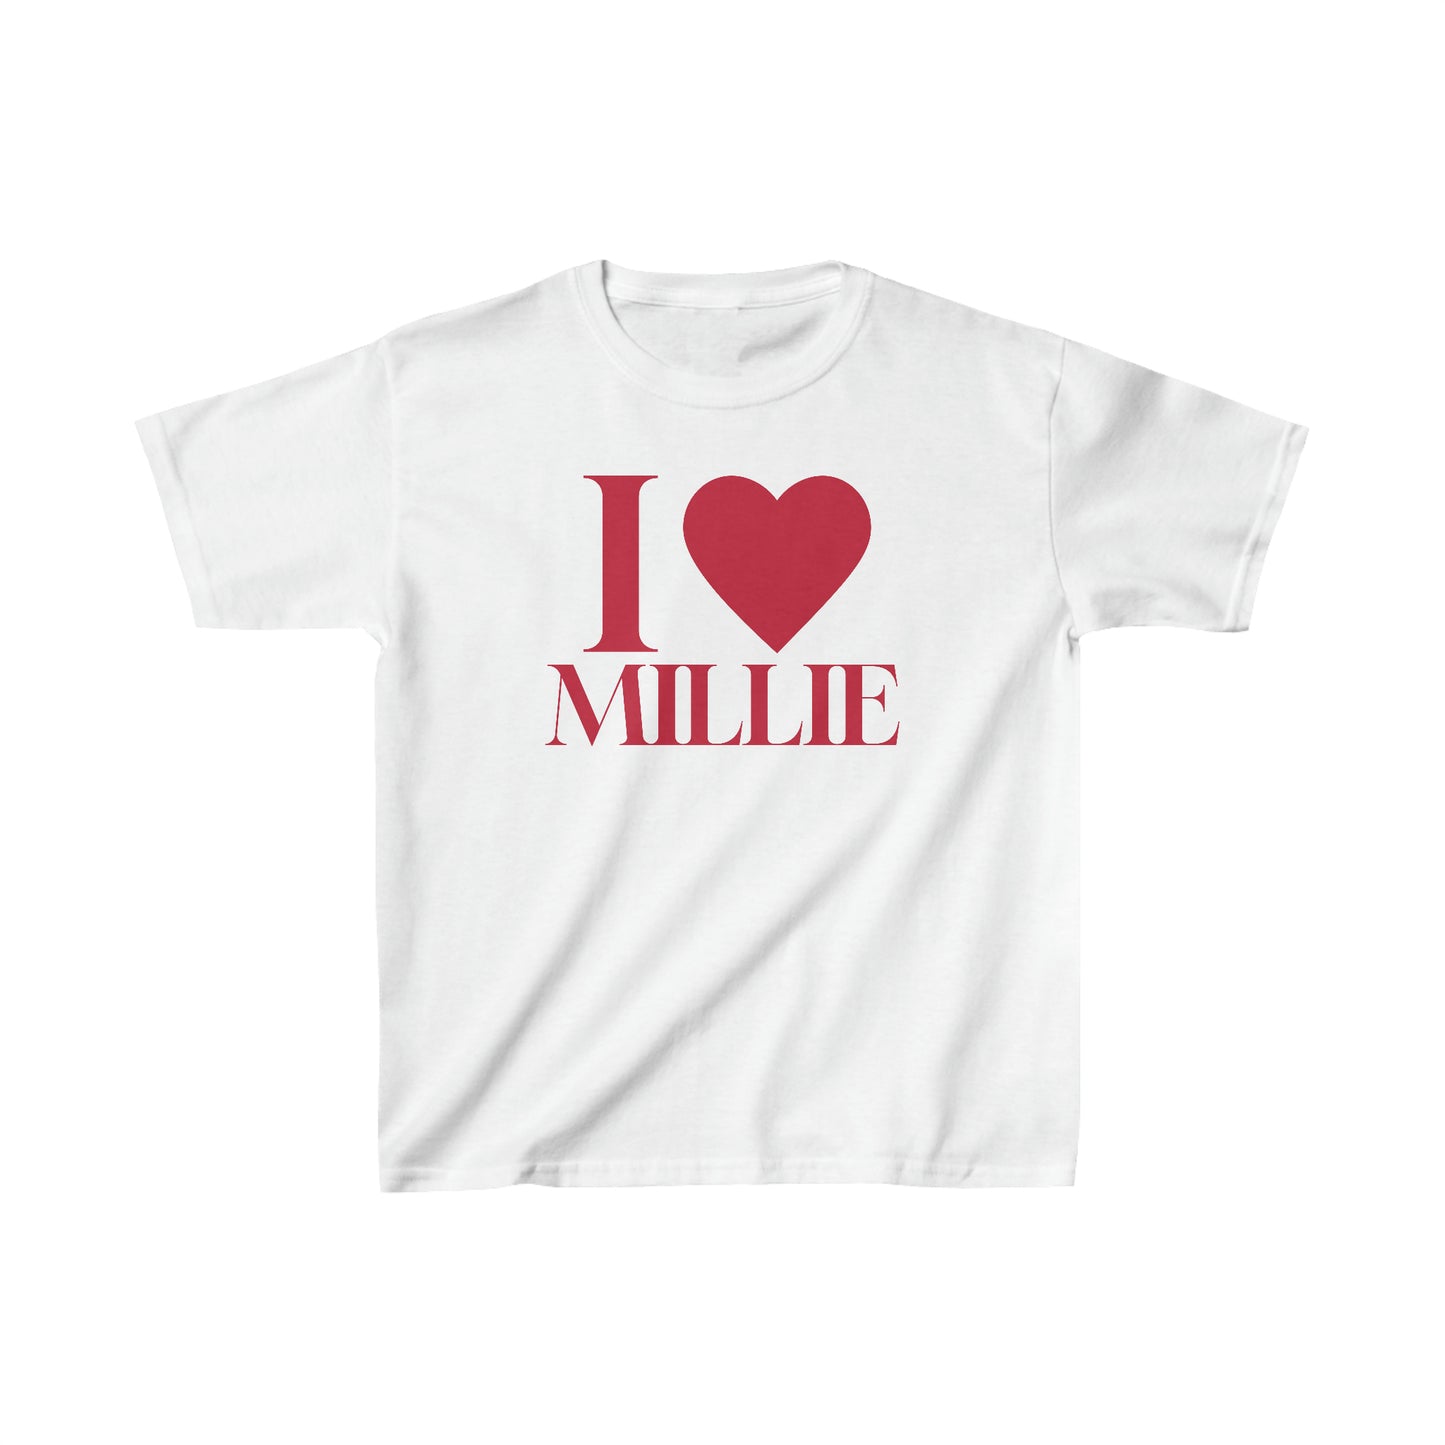 I Love Millie Tee  - Youth